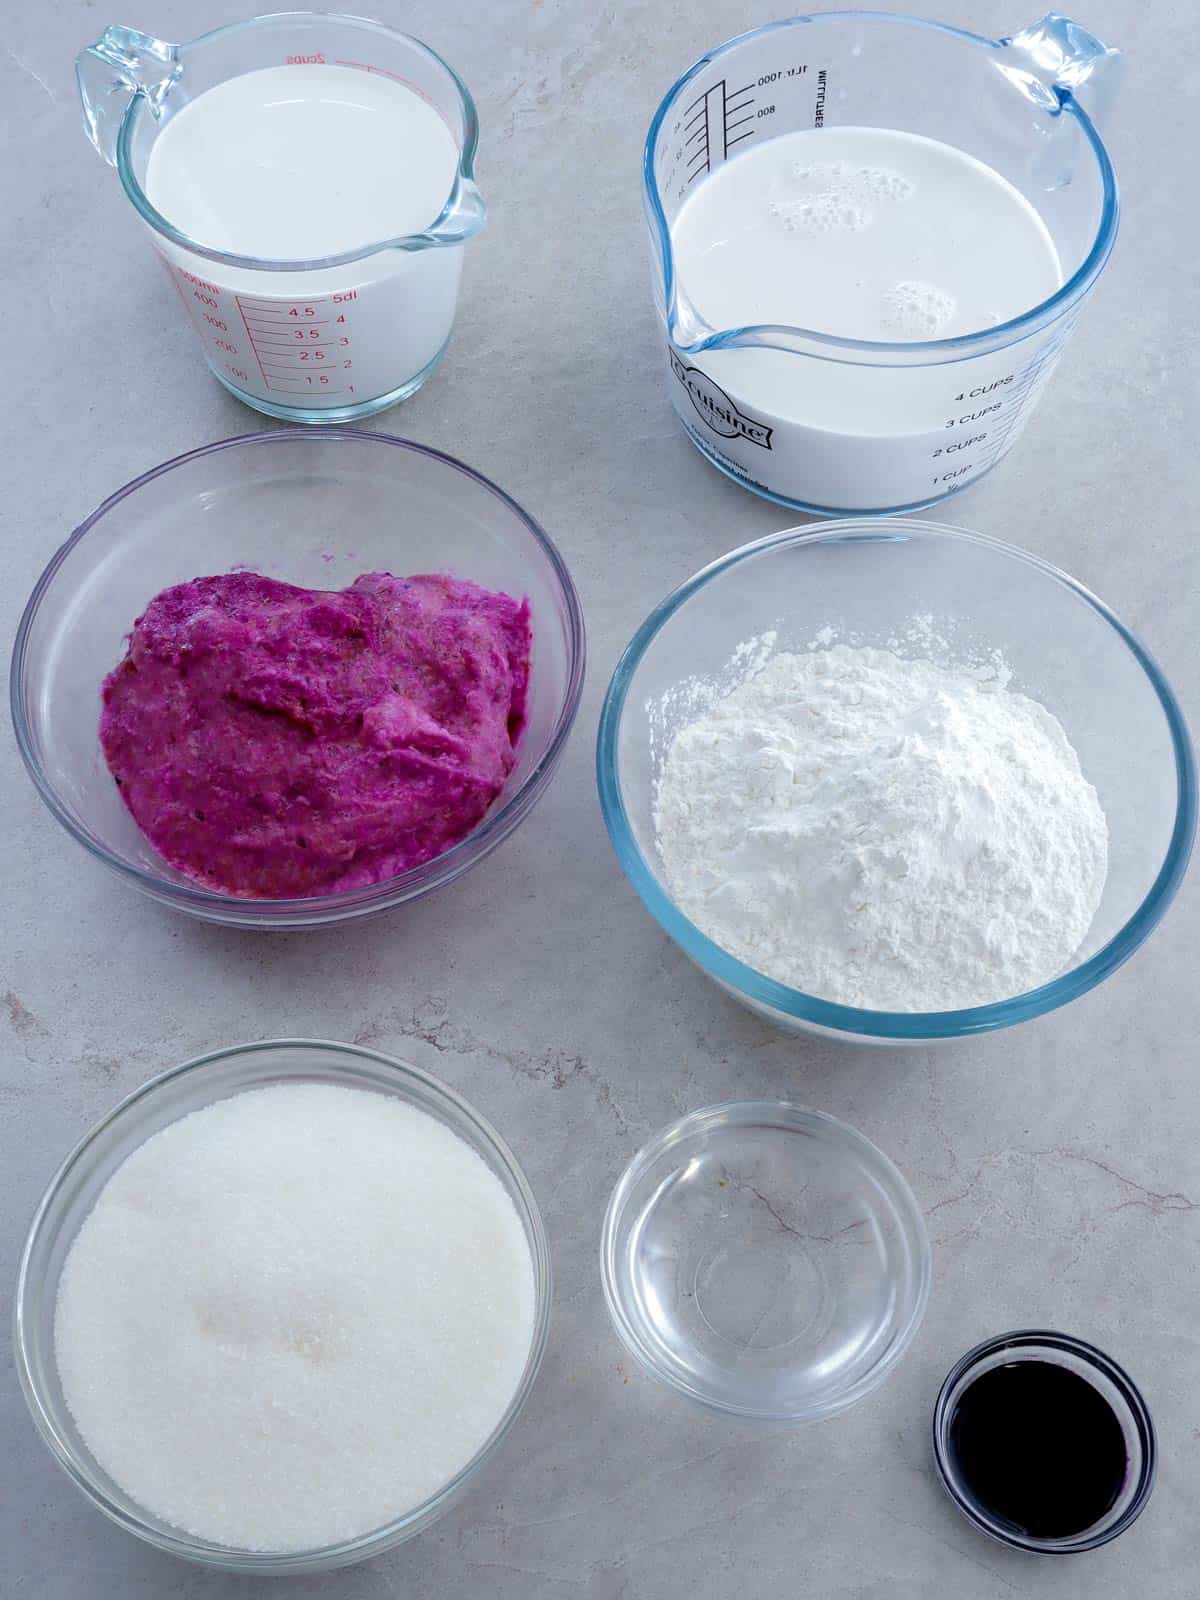 mashed purple yam, glutinous rice flour, coconut milk, sugar, coconut cream, water, purple yam extract in bowls